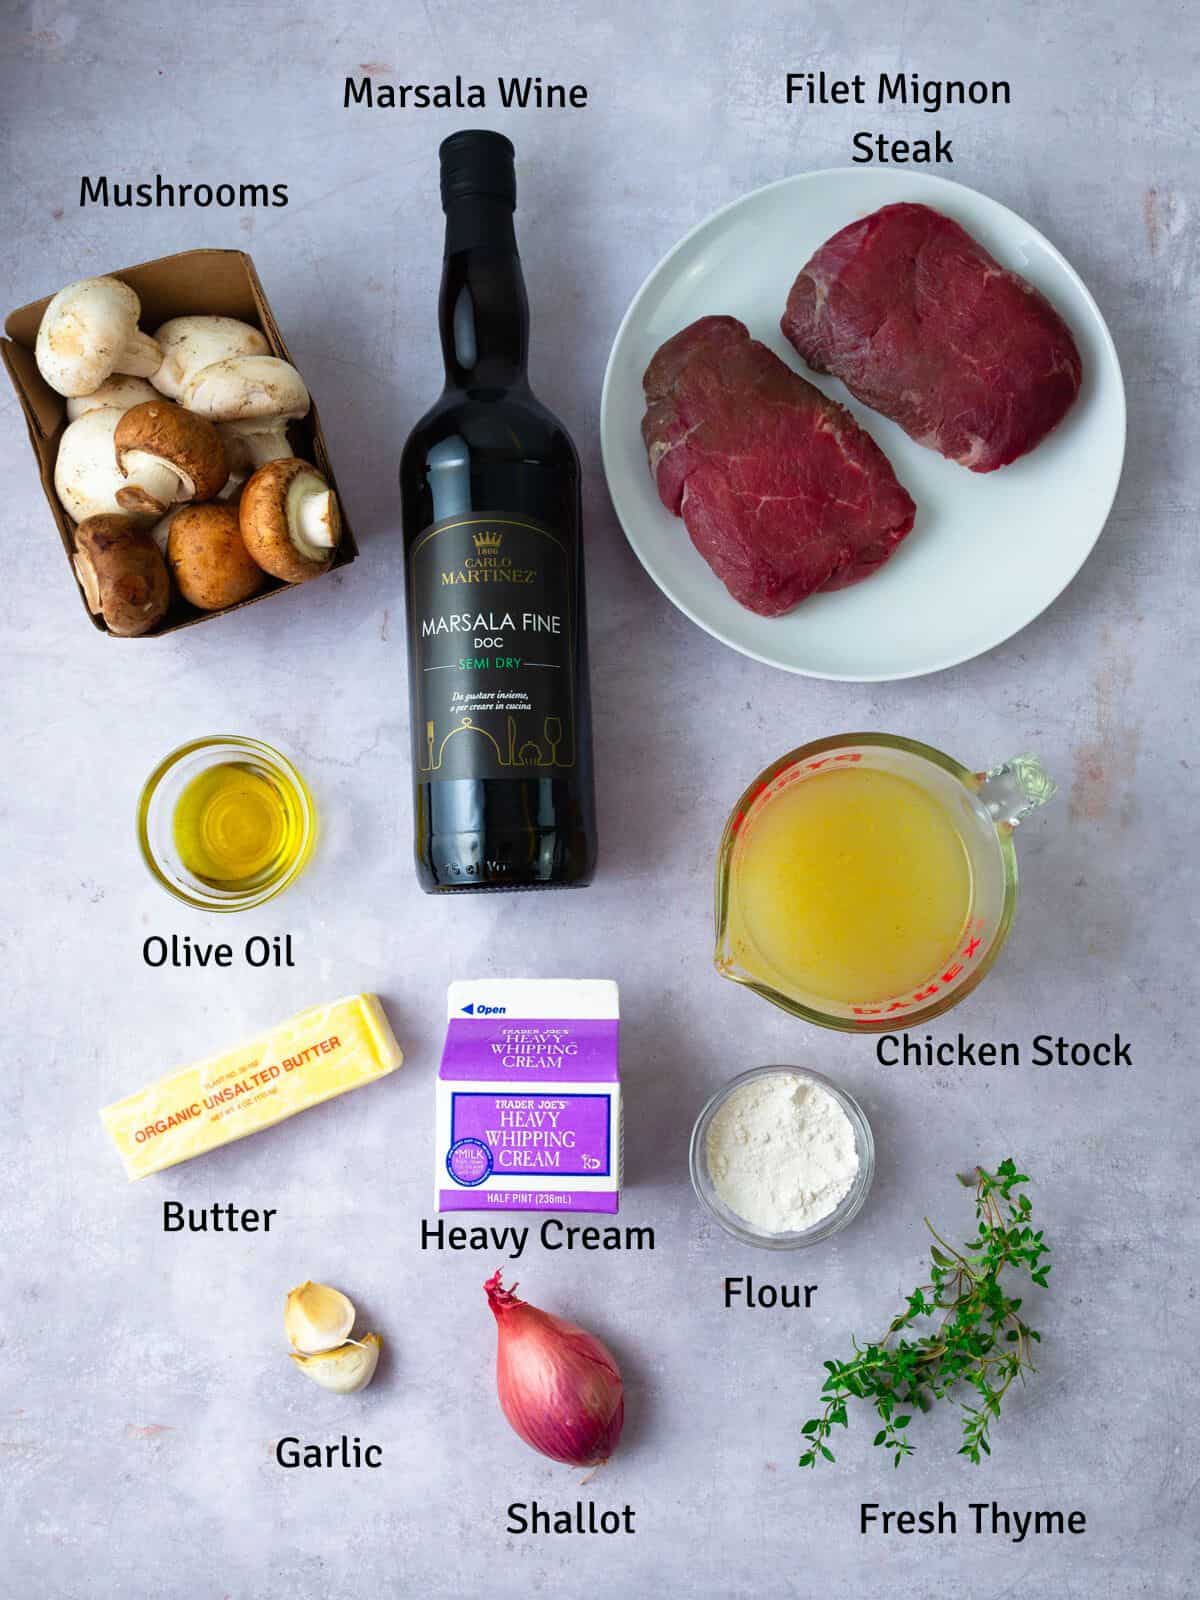 Ingredients for steak marsala, including filet mignon, button mushrooms, marsala wine, shallots, heavy cream, chicken stock and herbs.